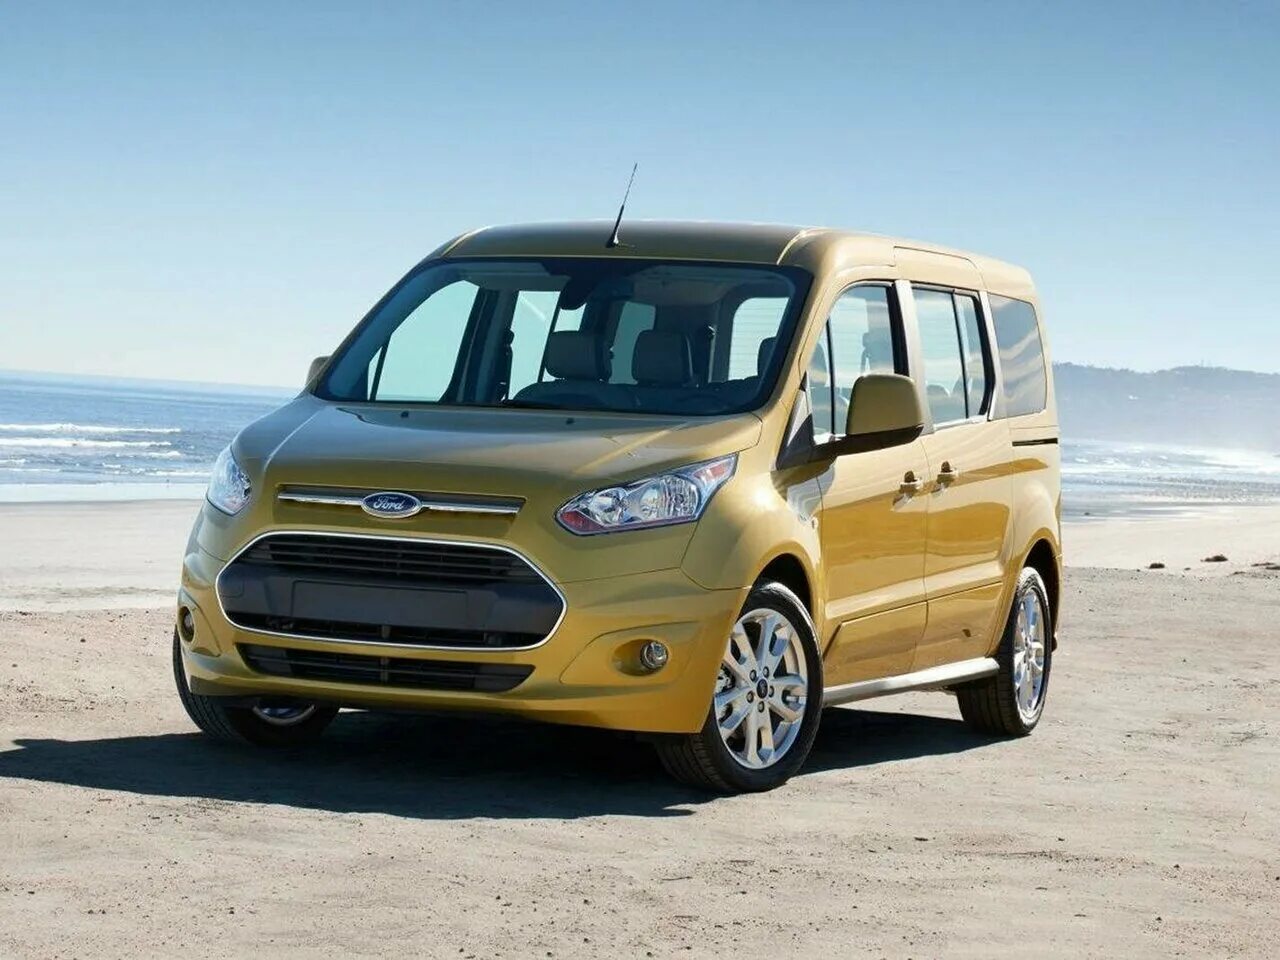 Купить форд минивэн. Ford Tourneo connect 2018. 2015 Ford Transit connect Wagon. Ford Transit 2018. Ford Transit connect 2018.